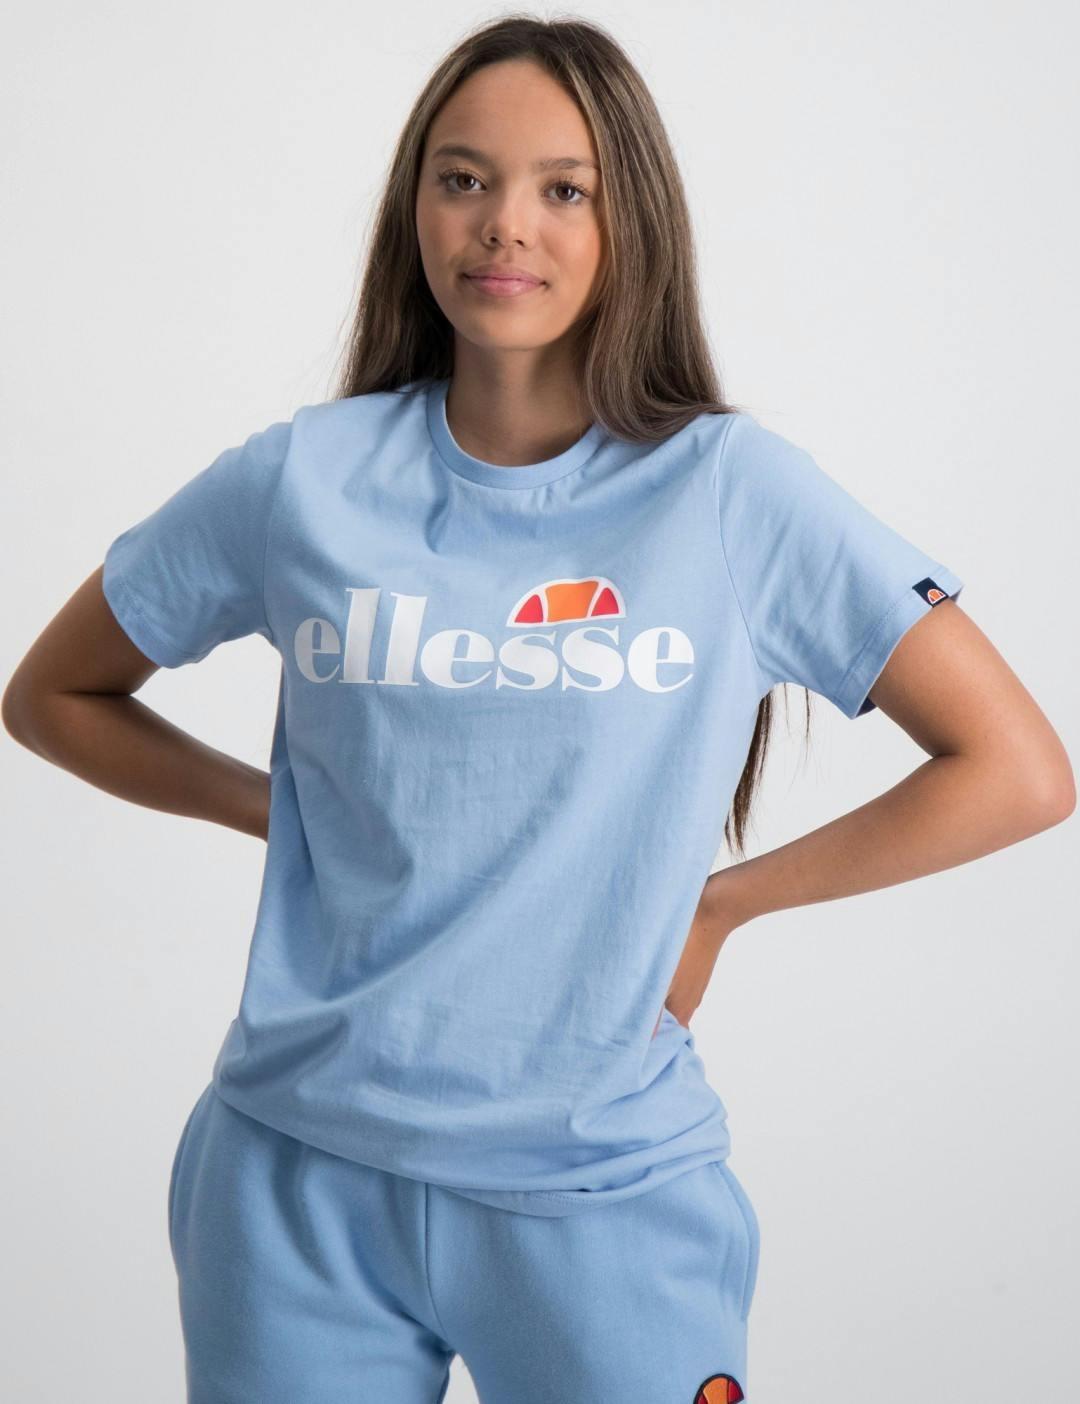 Ellesse | Store ungdom för barn Brand & T-shirts Kids